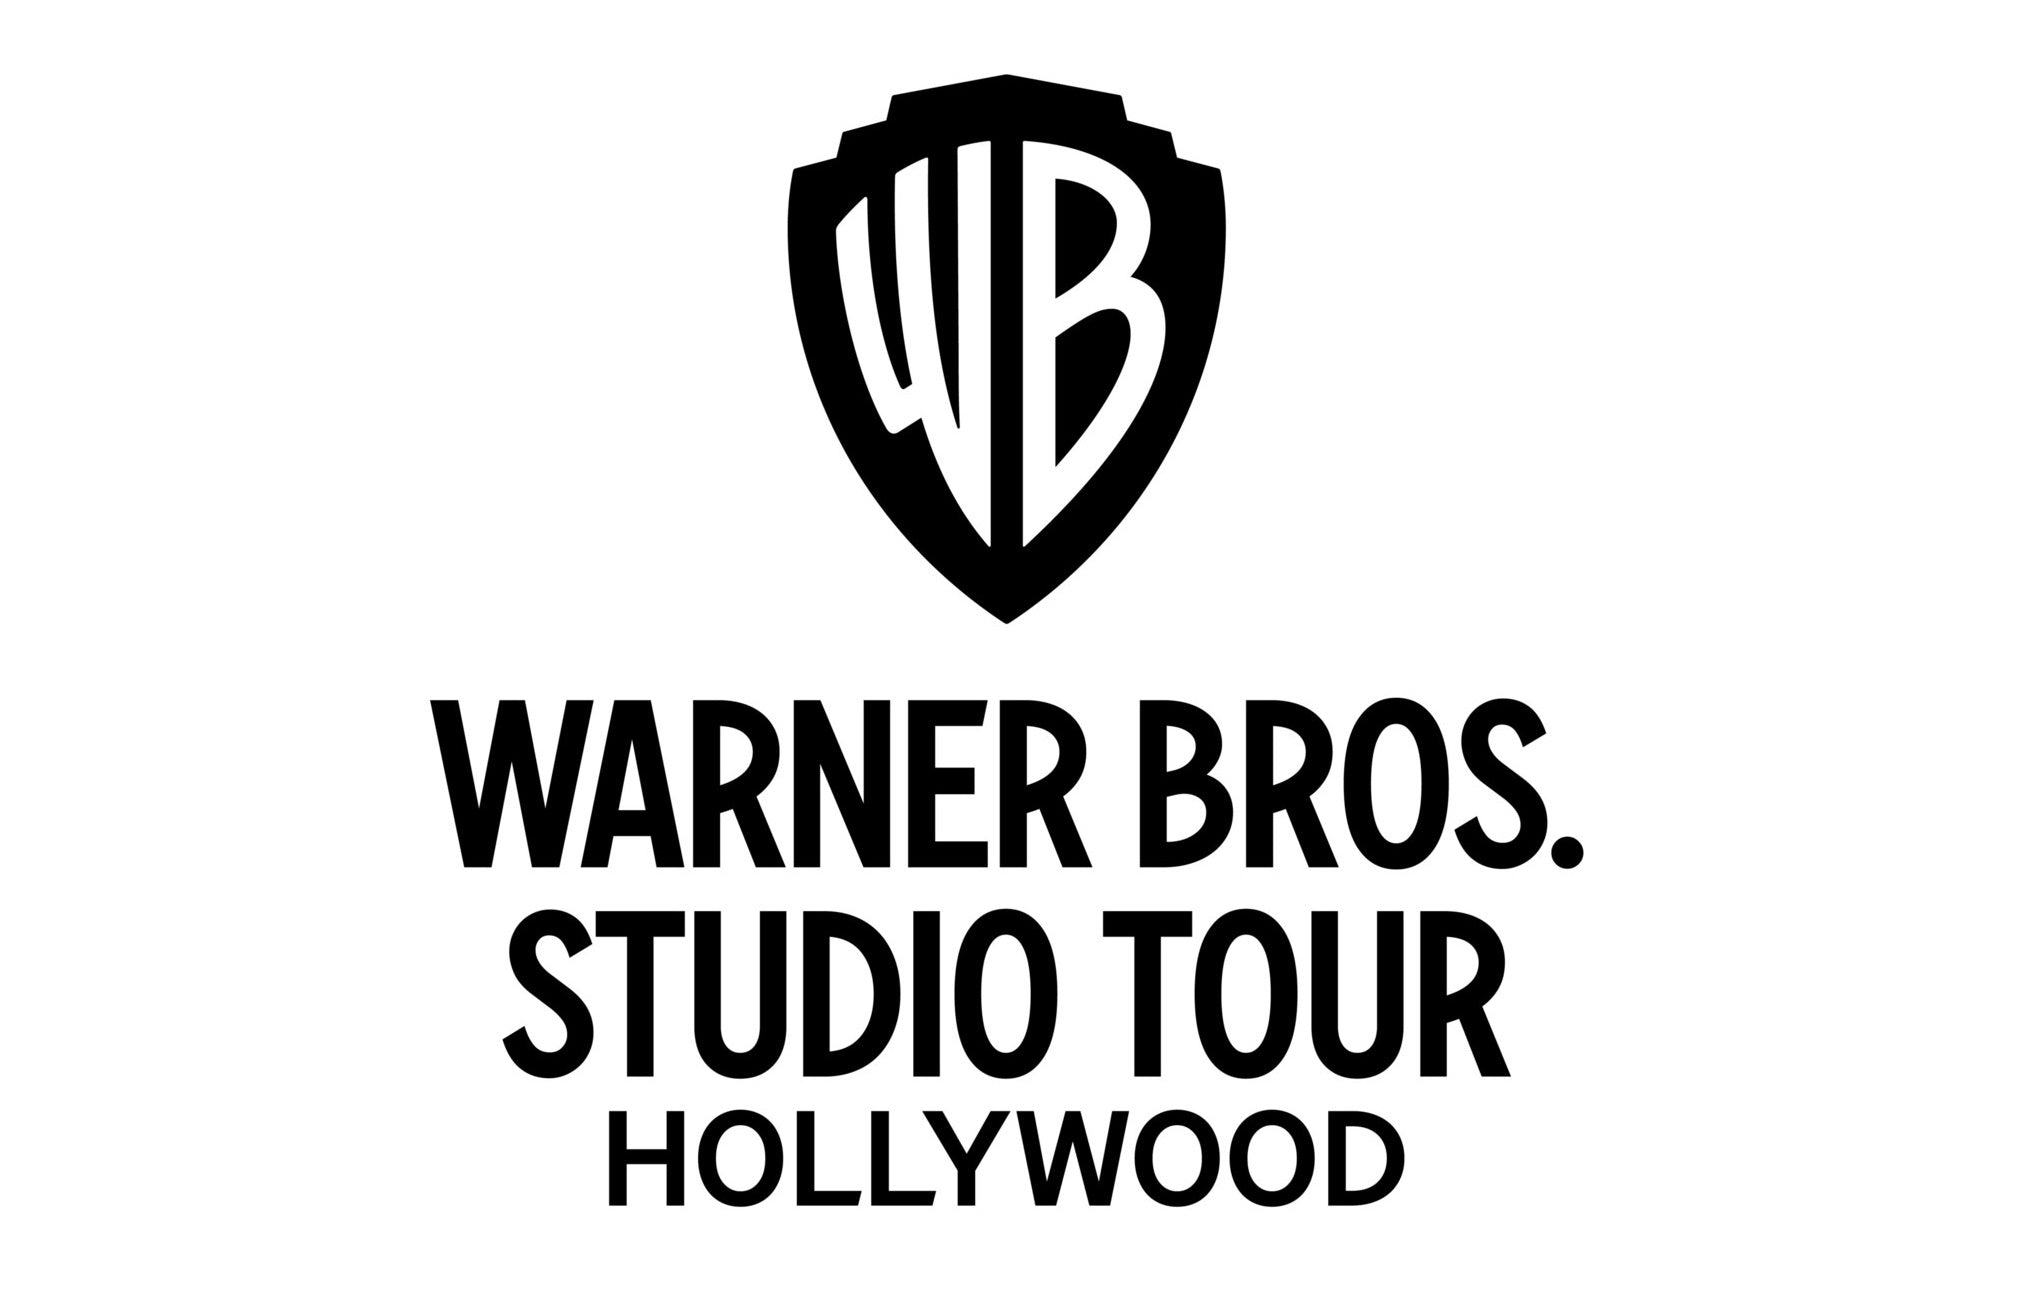 Warner Bros. Studio Tour Hollywood Warner Bros. Studio Tour Hollywood